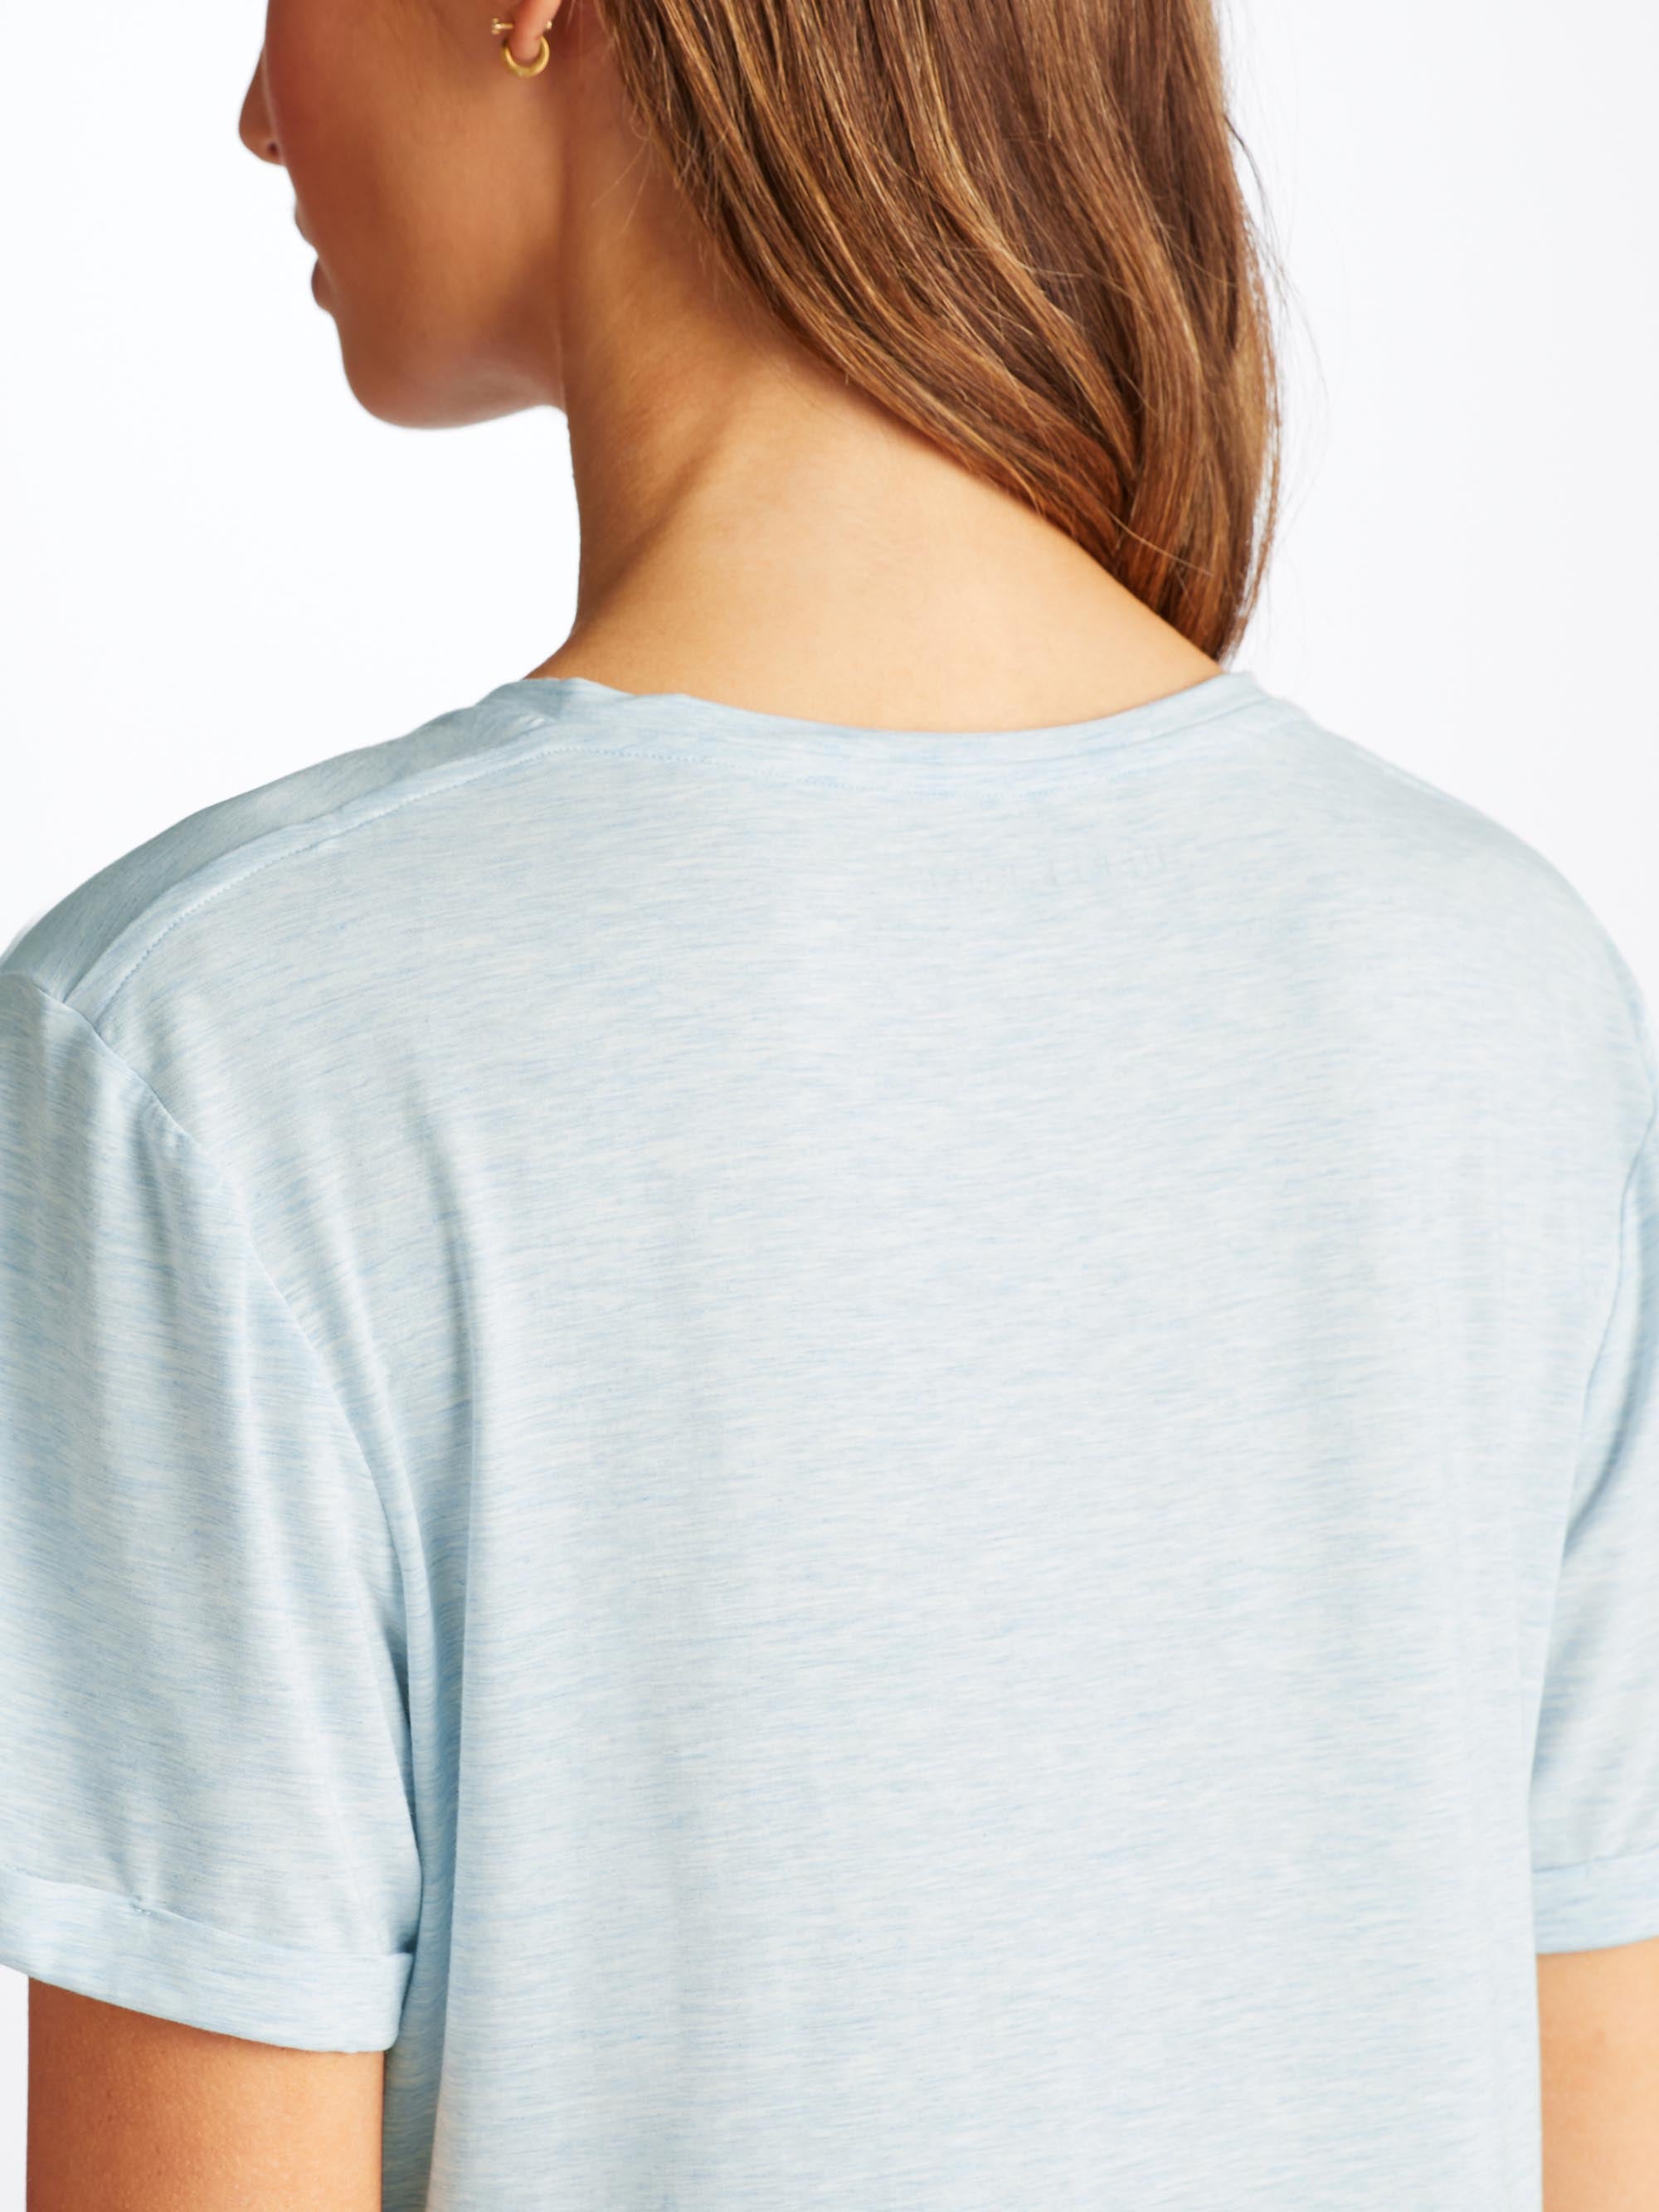 Women's V-Neck Sleep T-Shirt Ethan Micro Modal Stretch Light Blue Heather